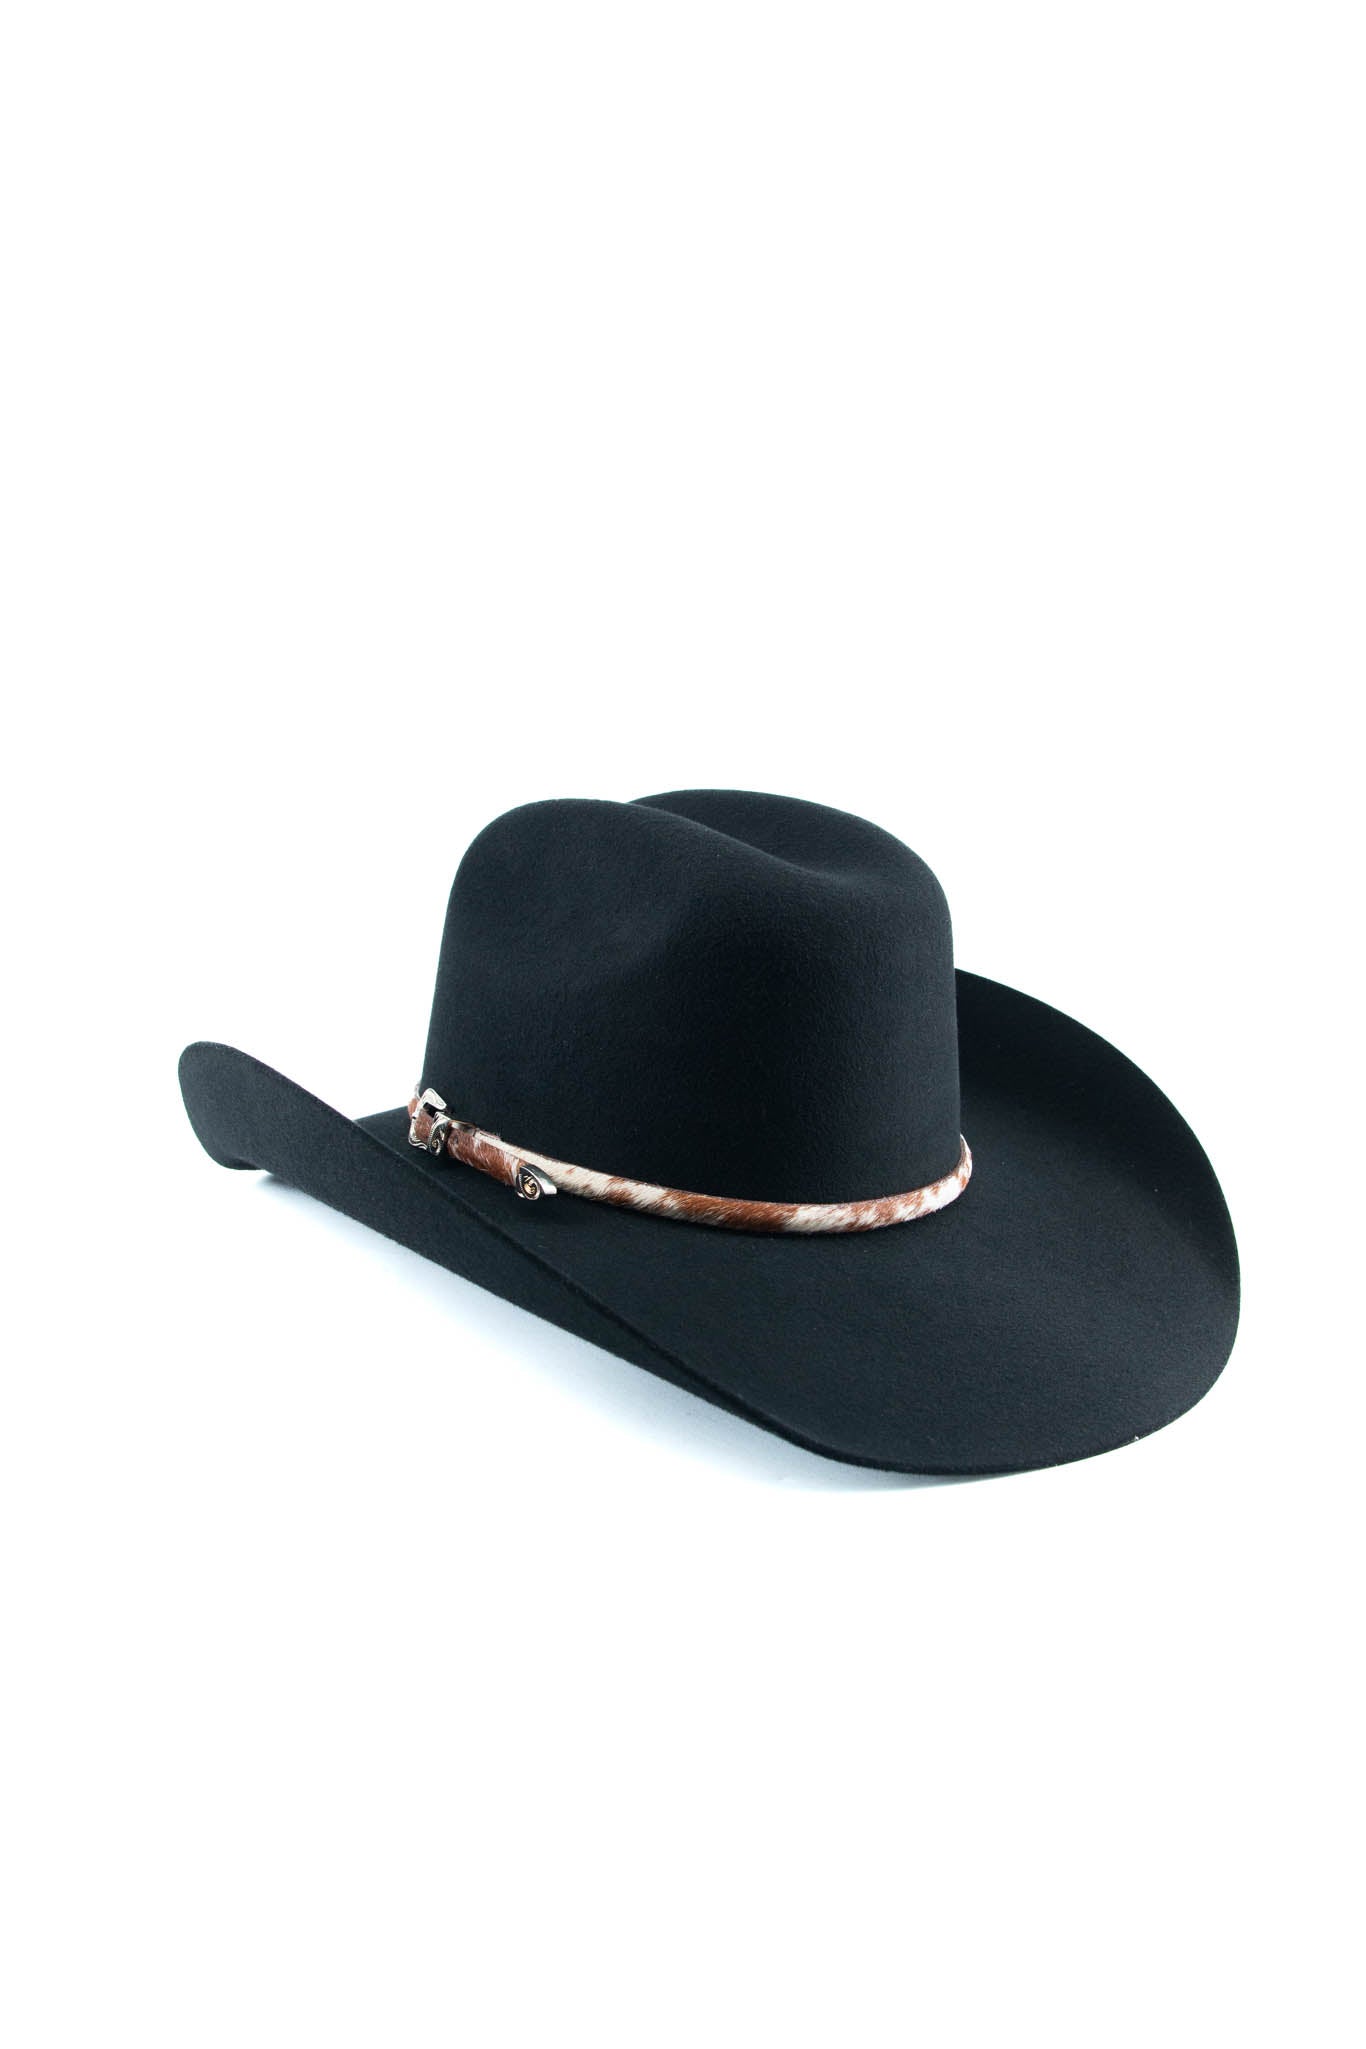 Plain Cowhide Hatband